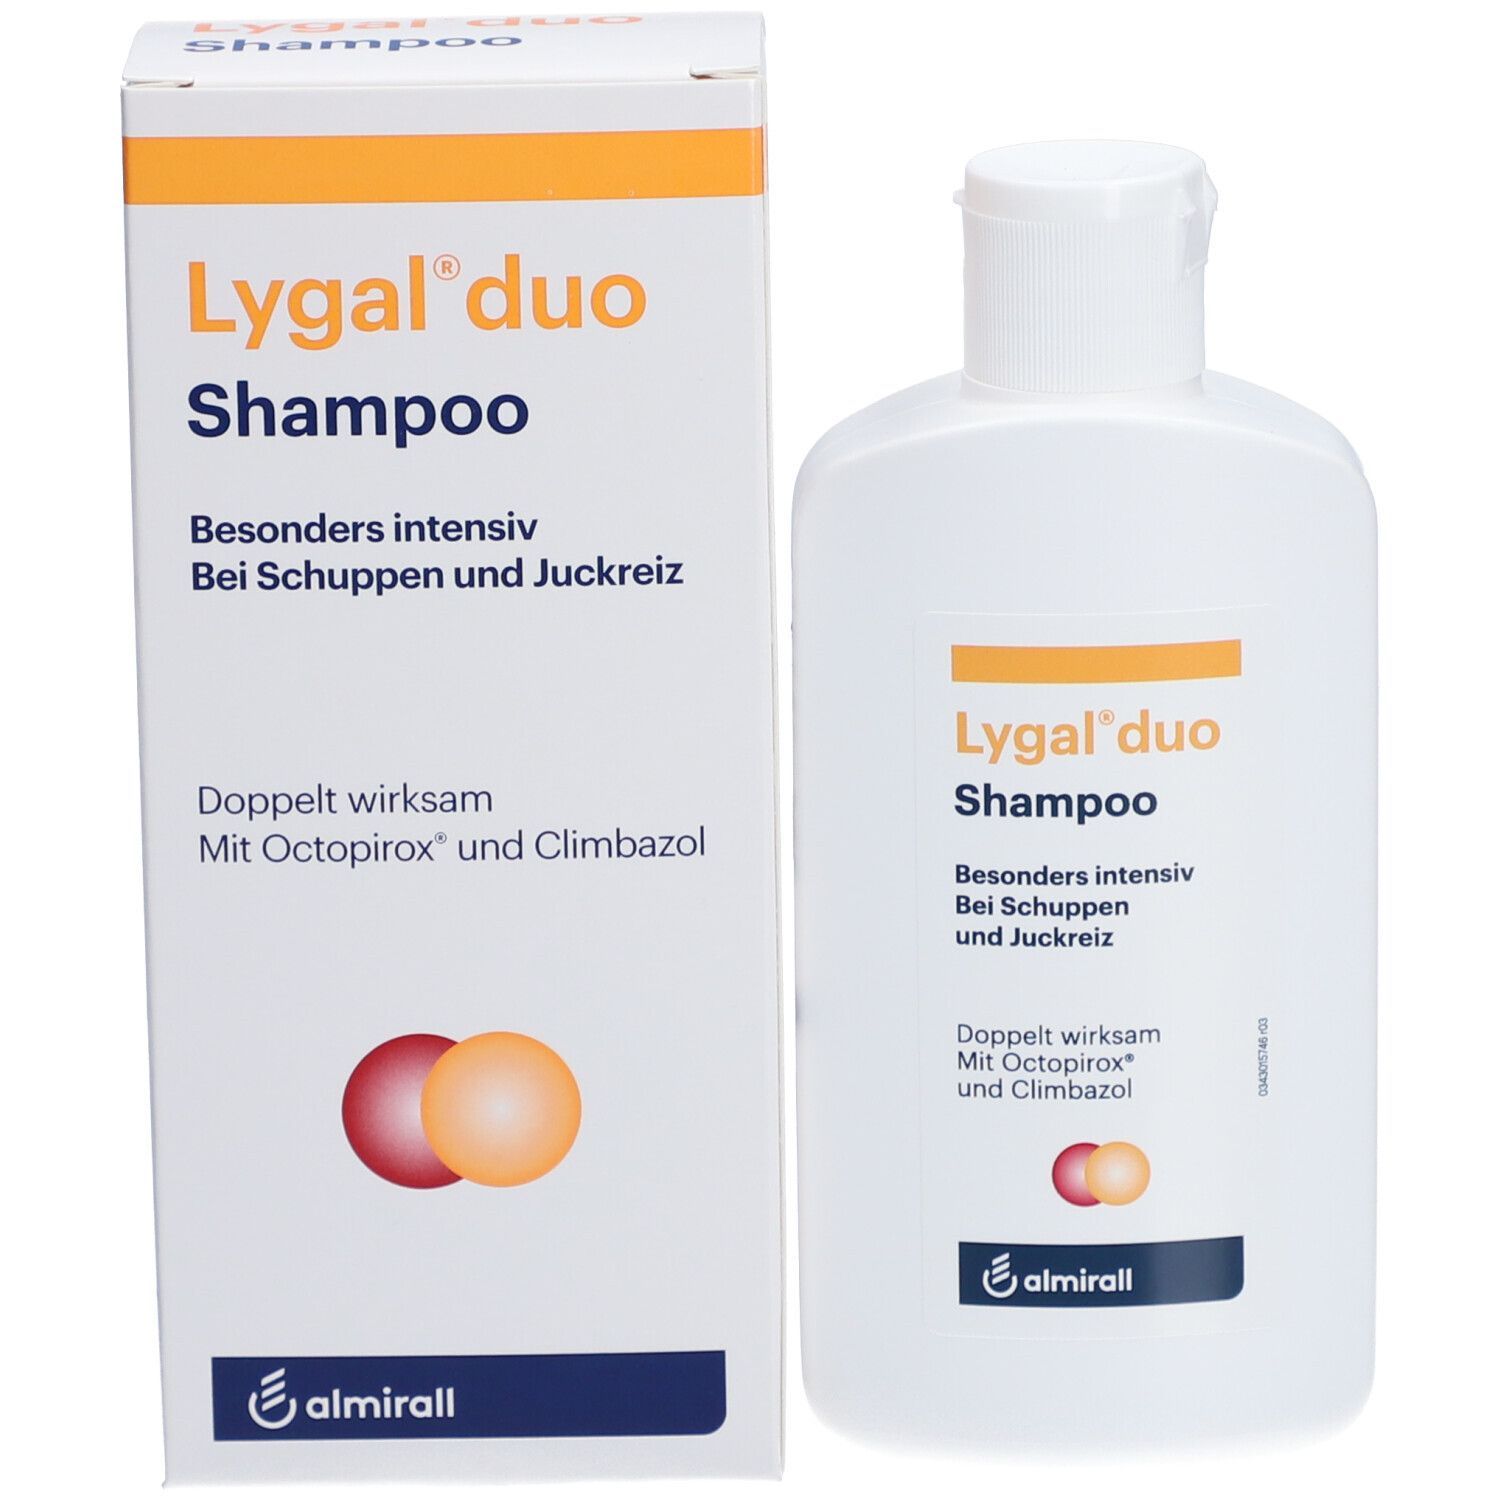 Lygal® duo SHAMPOOING